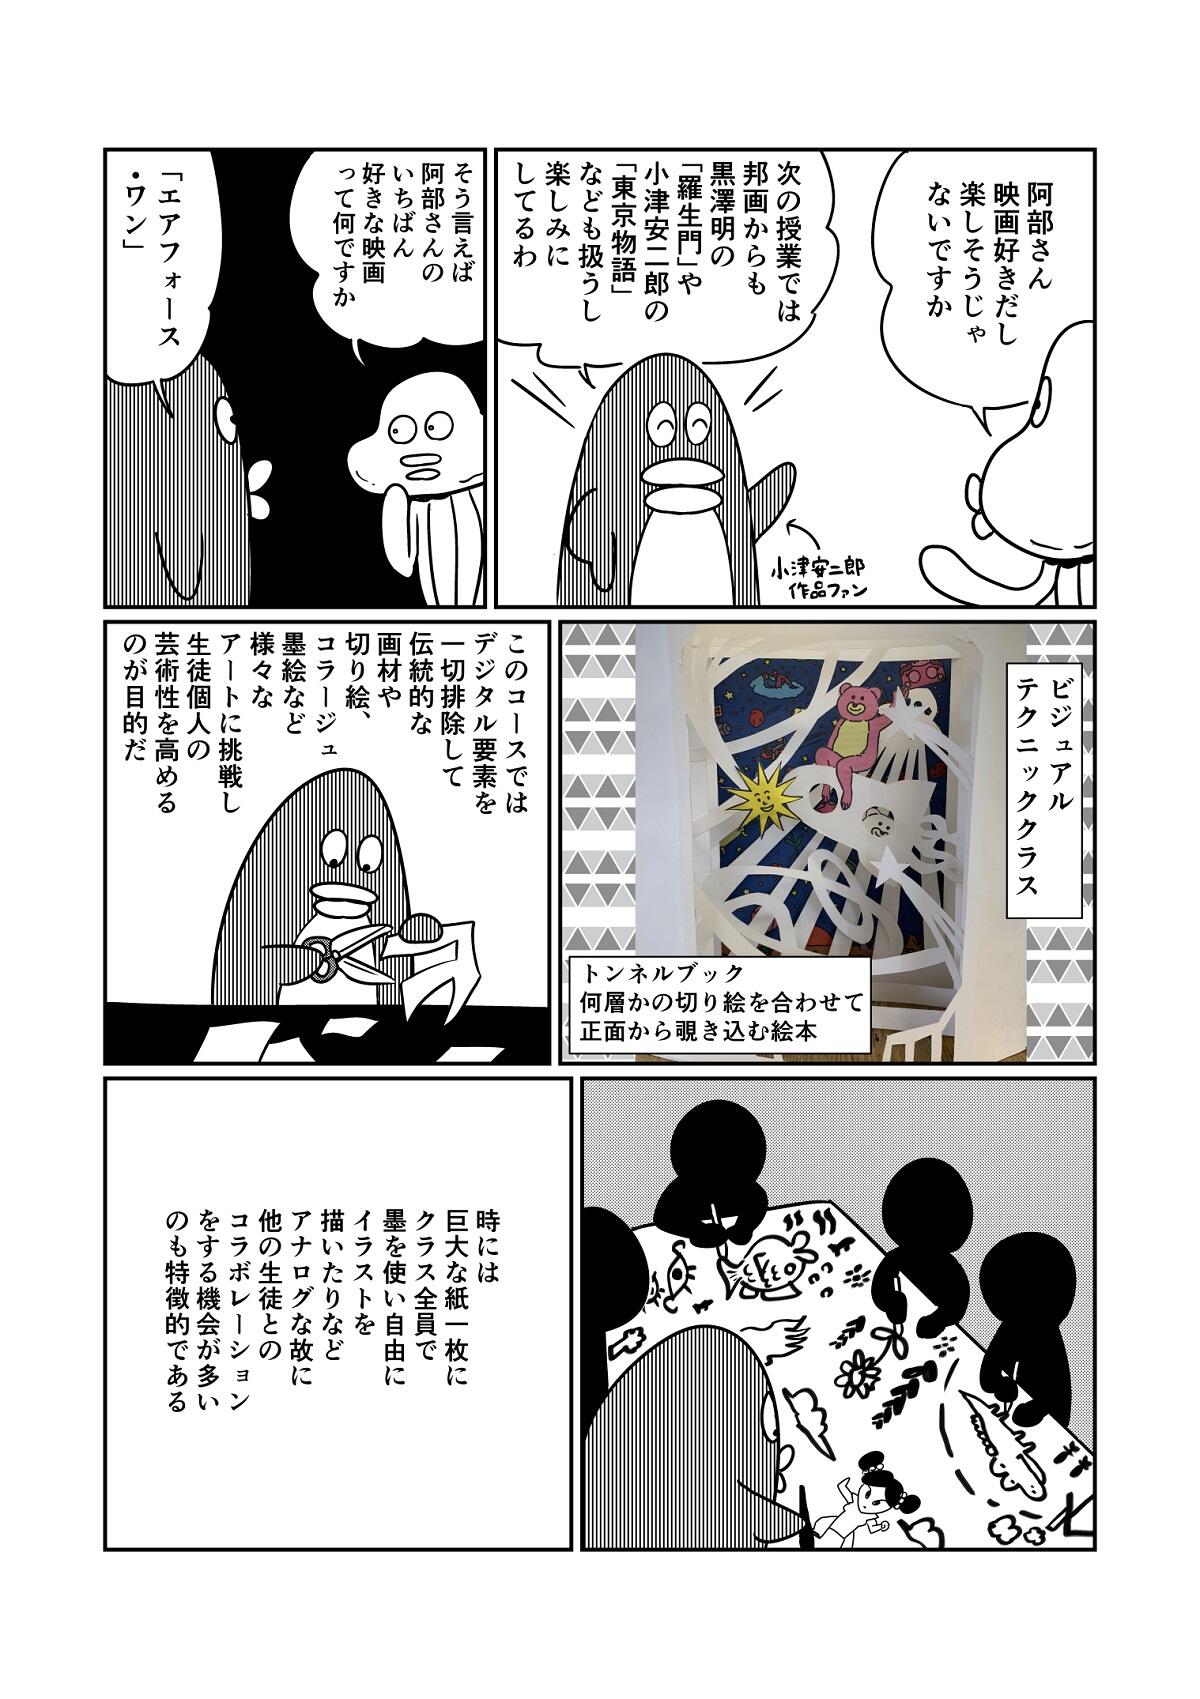 https://www.ryugaku.co.jp/column/images/jawamura14_4_1200.jpg